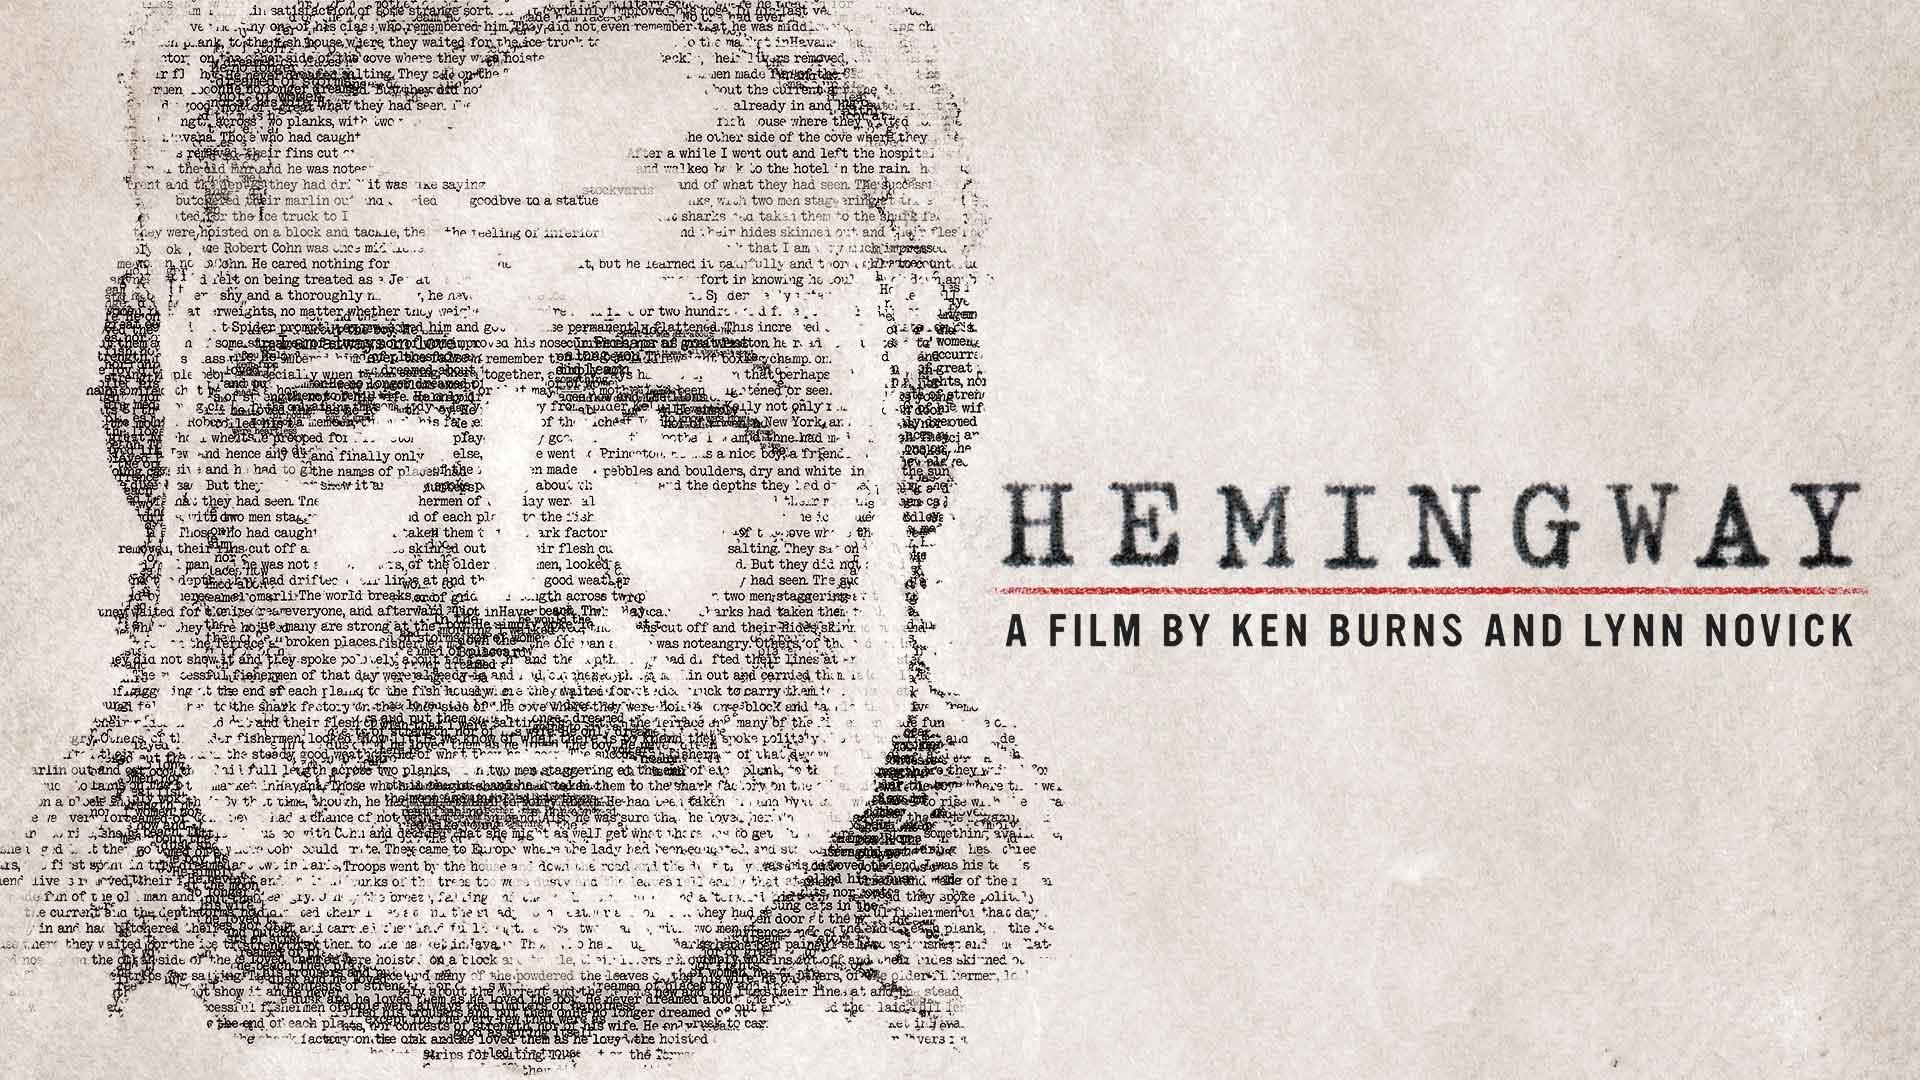 Hemingway: A film by Ken Burns and Lynn Novick